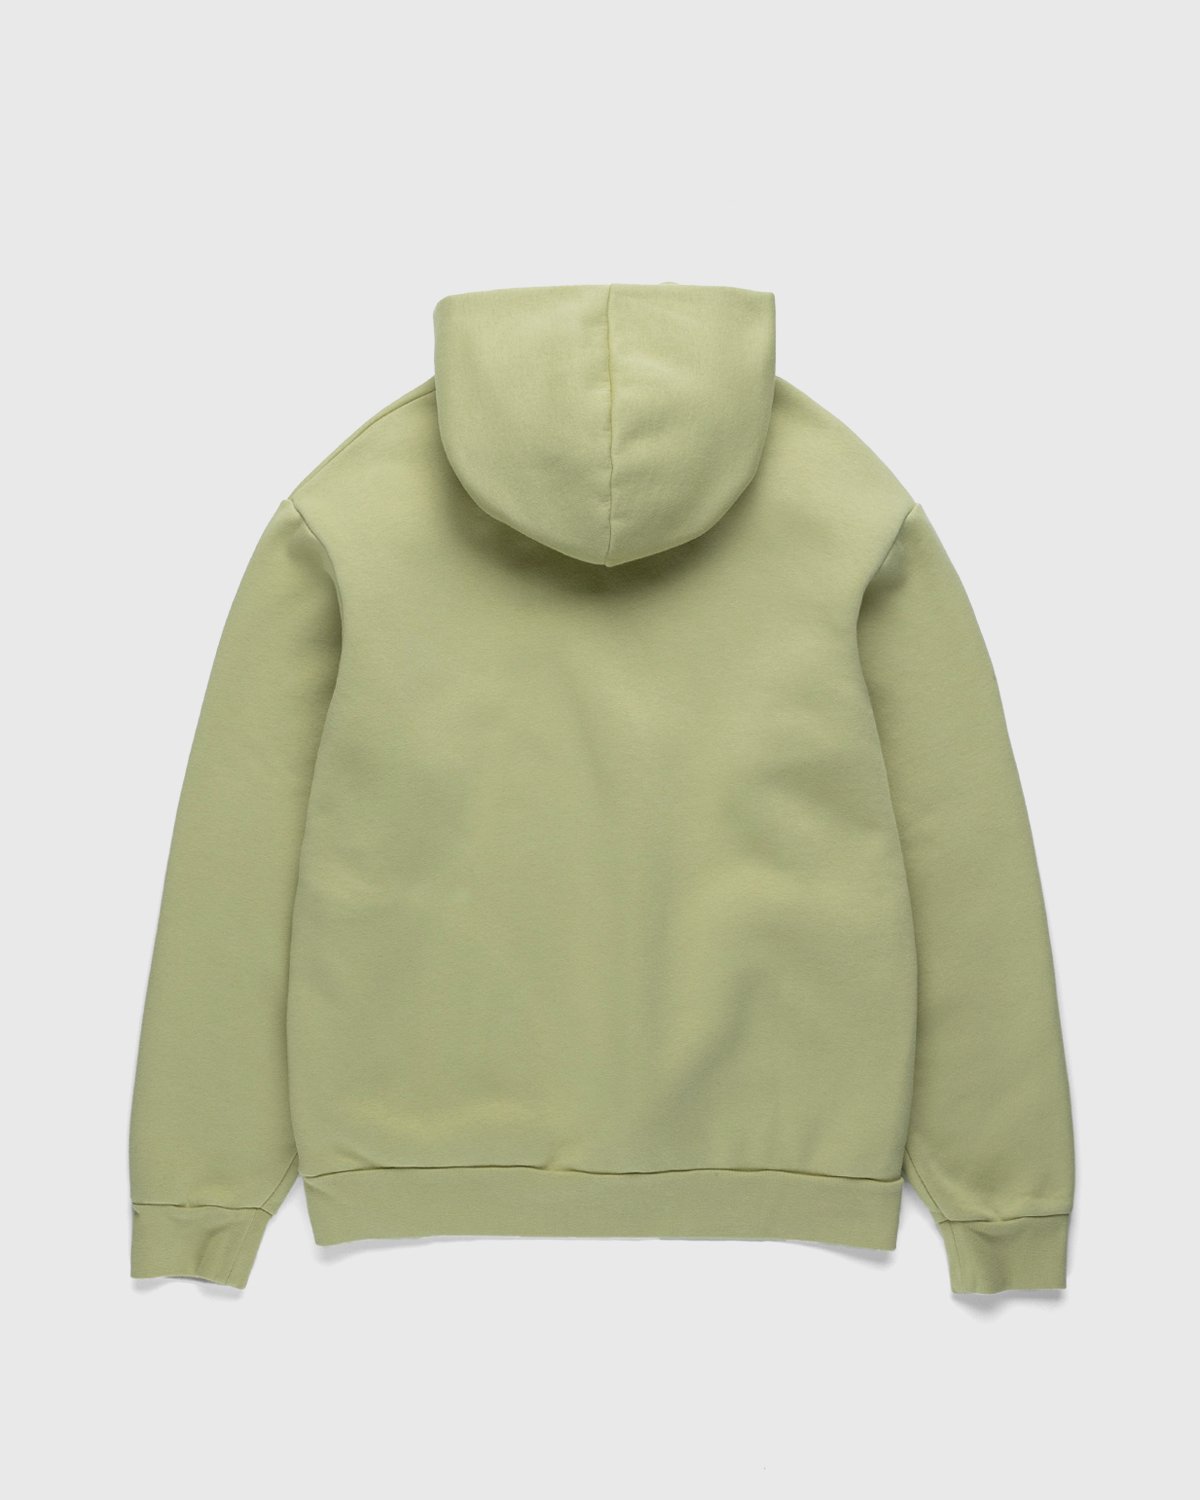 Acne Studios - Midweight Fleece Hooded Sweatshirt Pale Green - Clothing - Green - Image 2